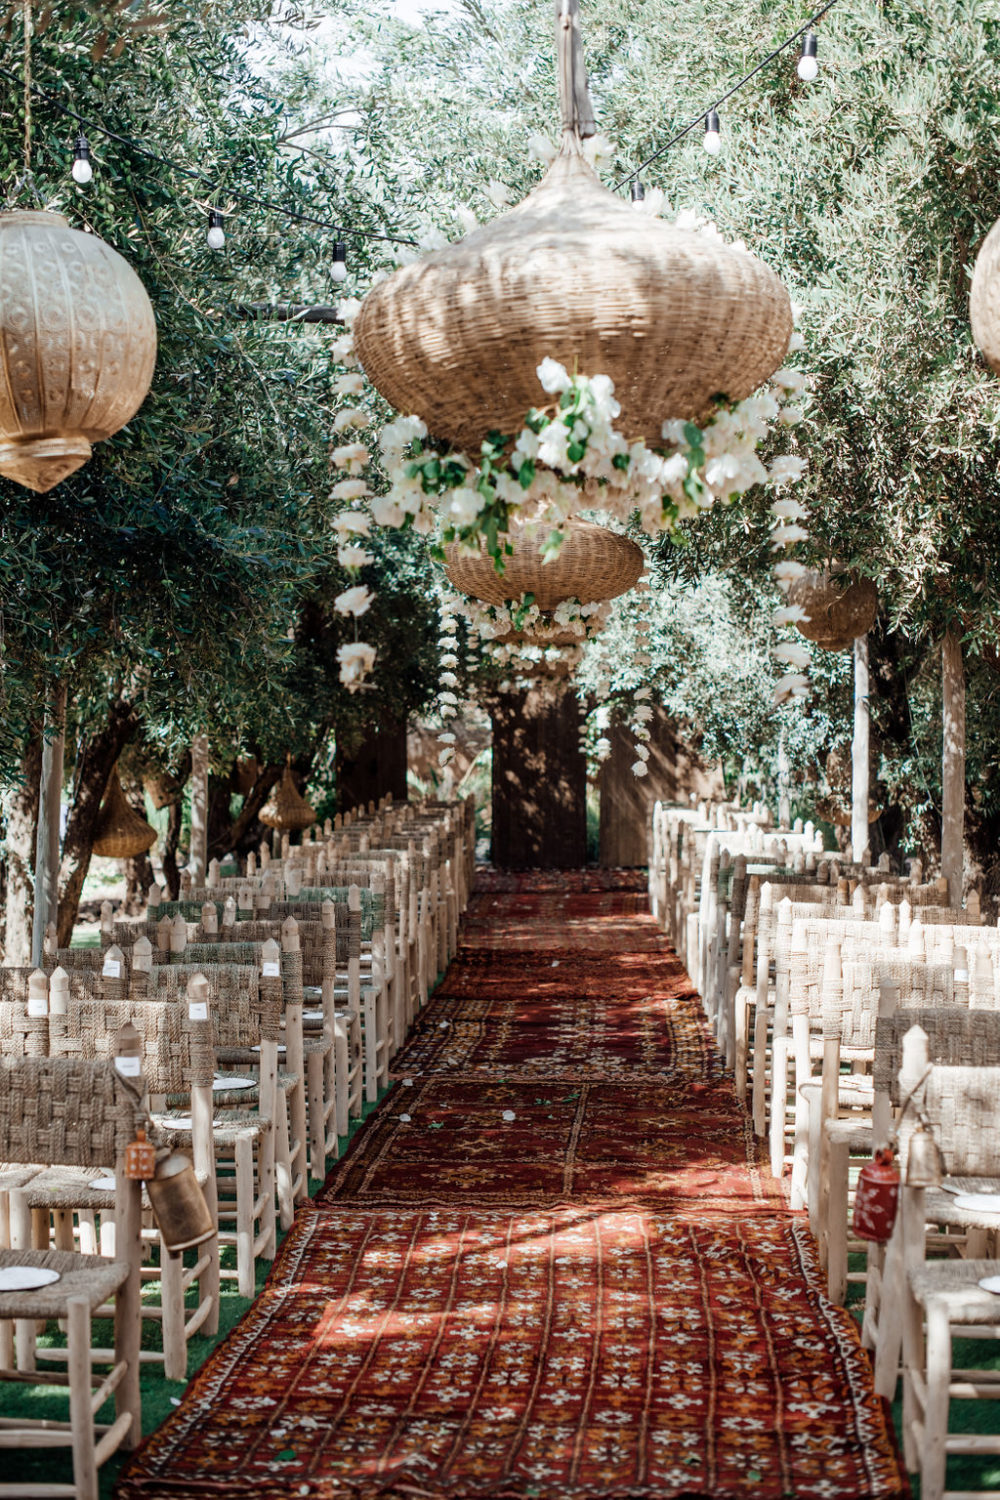 Un mariage à Marrakech - Charlie + AJ - Blog Mariage Madame C